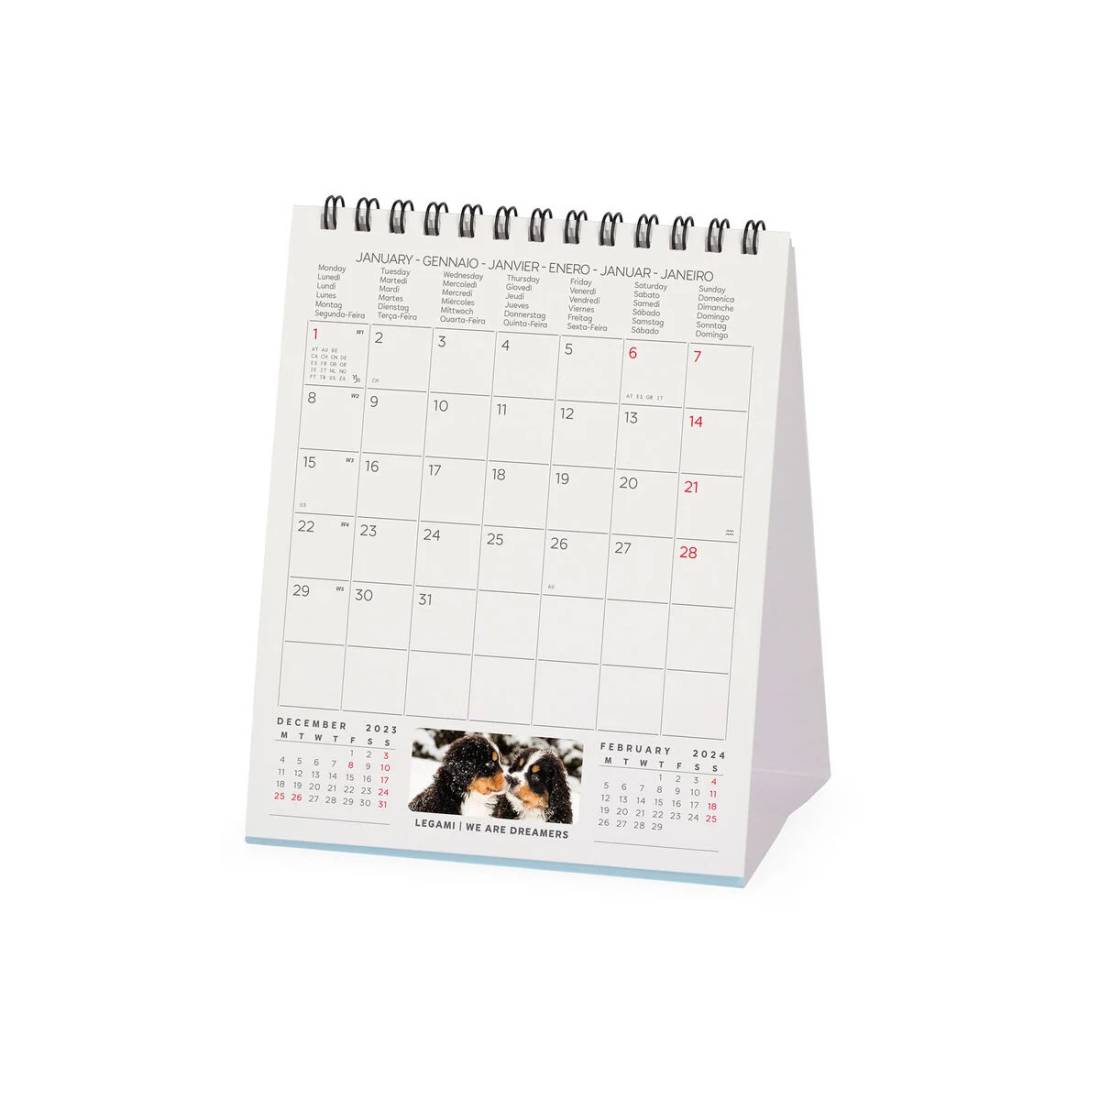 2024 Calendario Da Tavolo 12x14,5cm Legami - Puppies